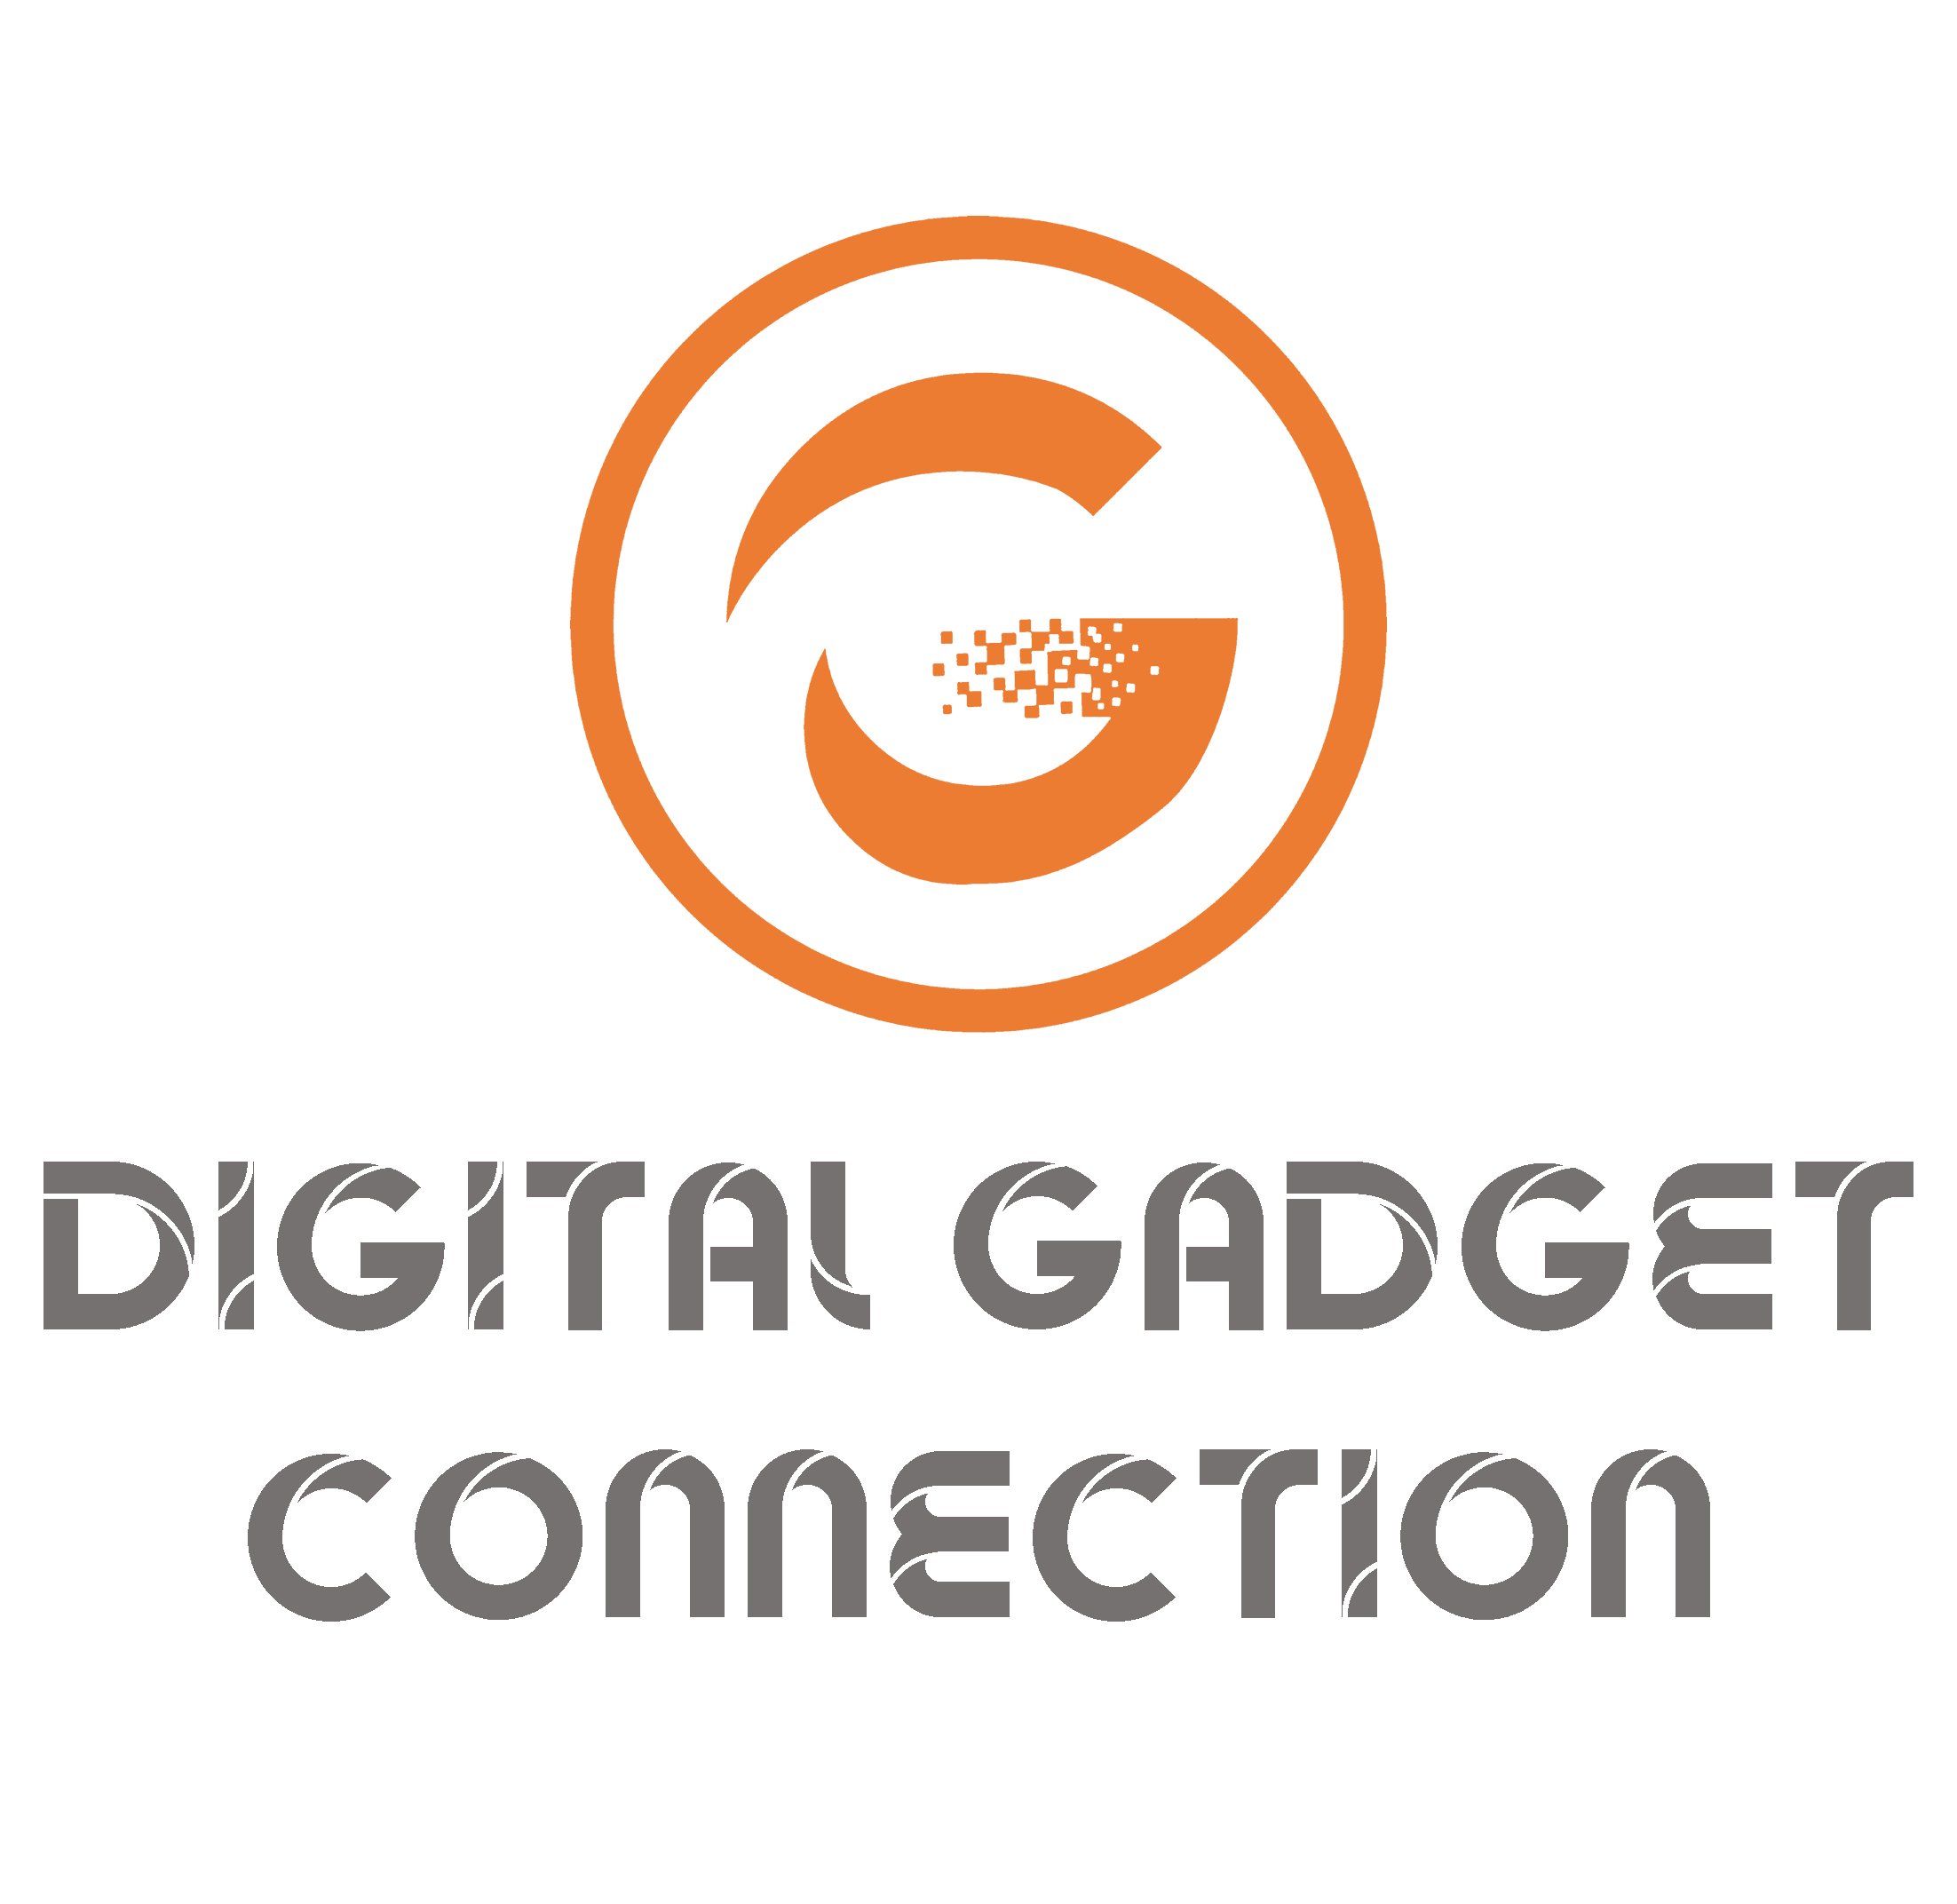 Digital Gadget Connection - WhatsApp button sample